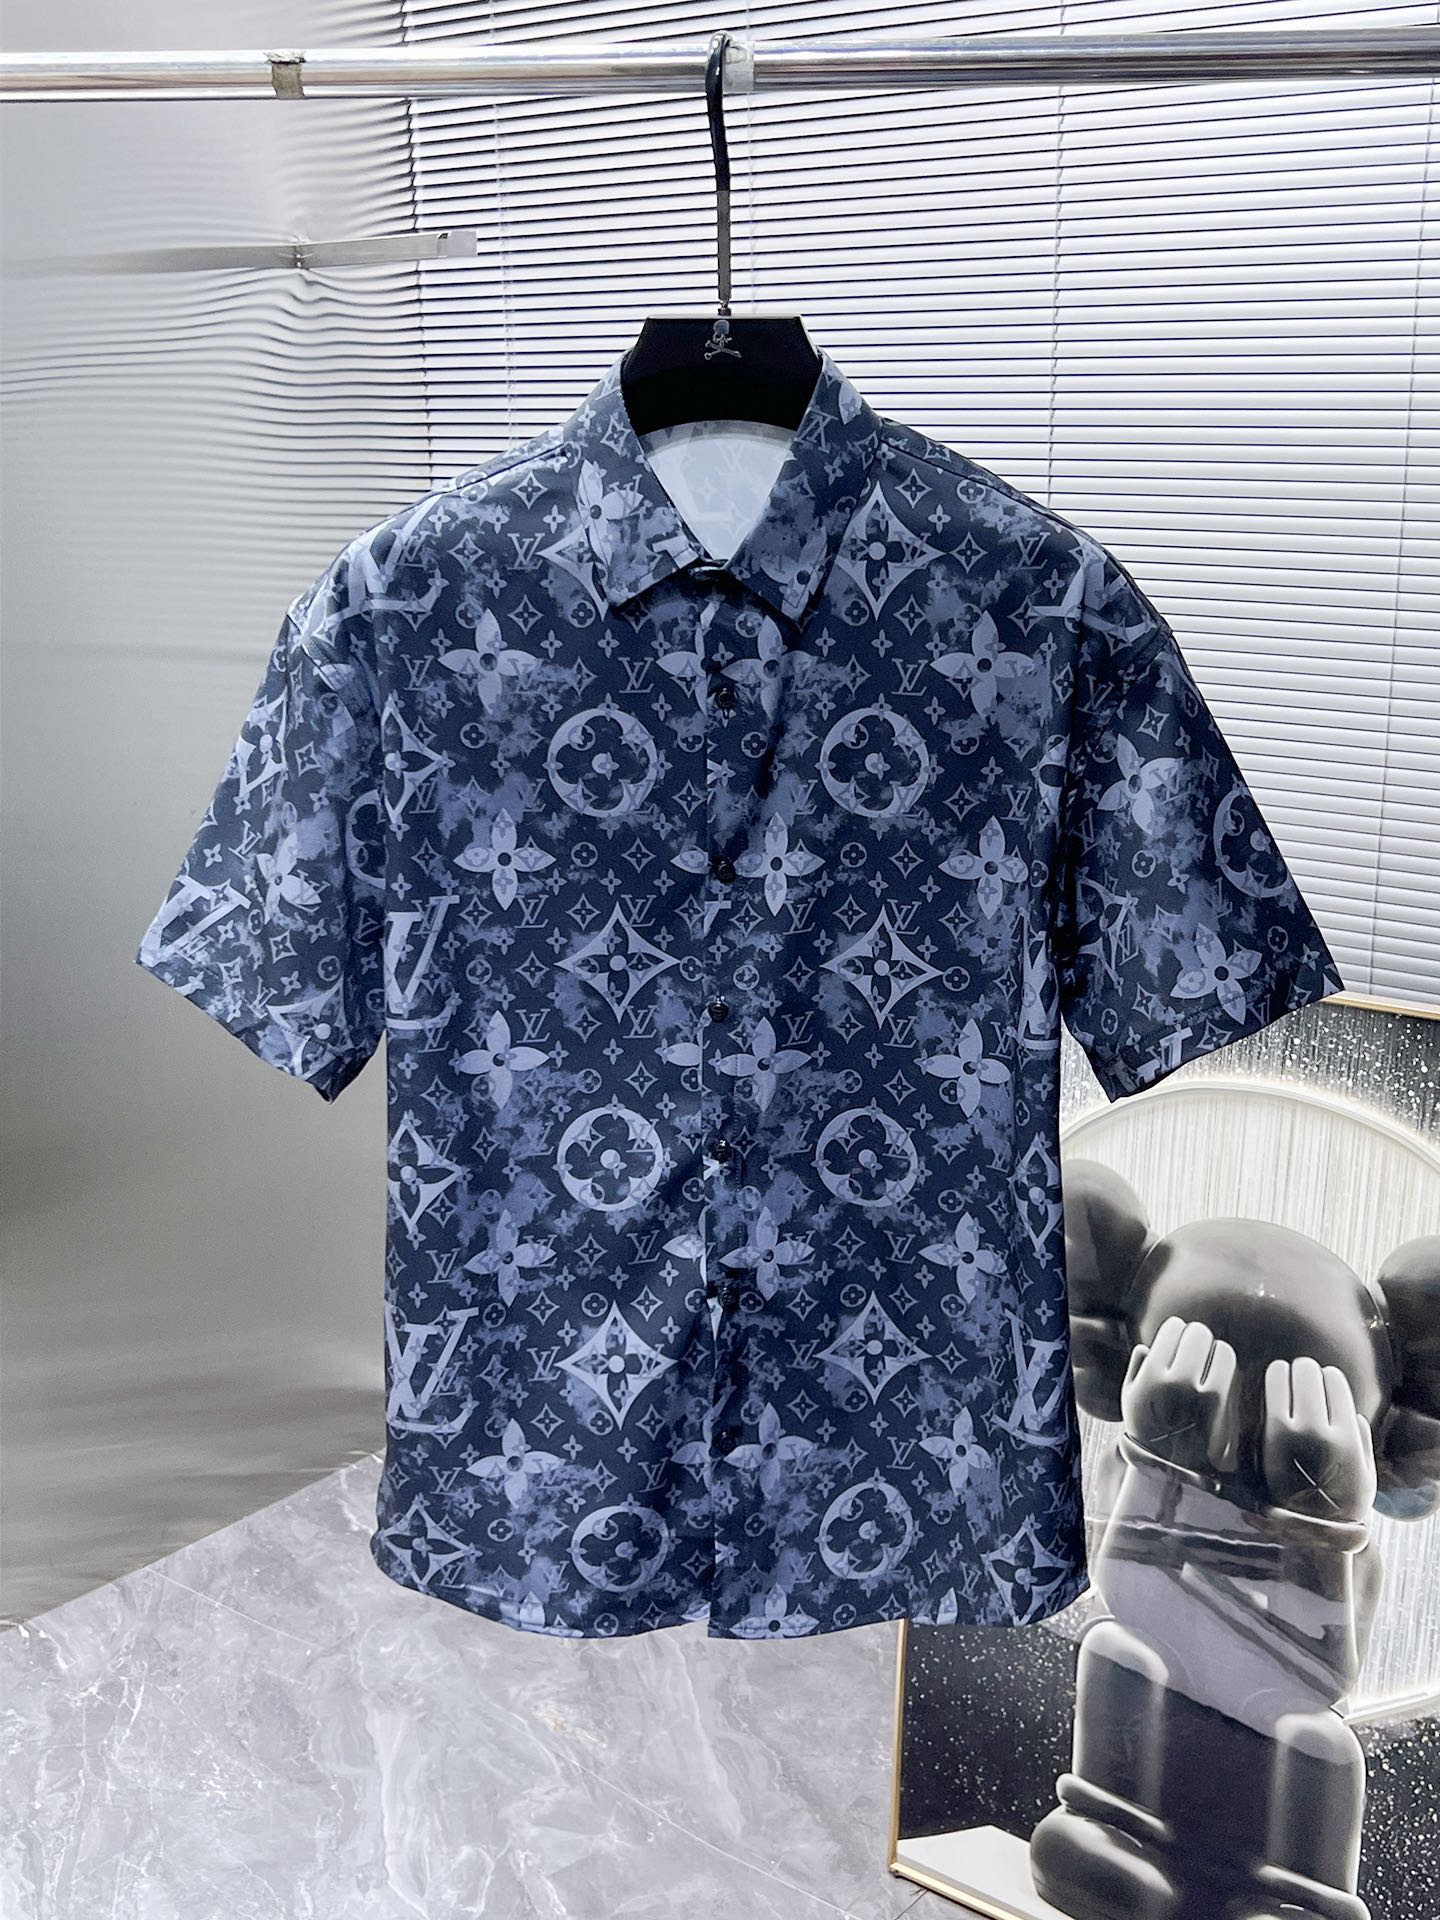 Louis Vuitton Clothing Shirts & Blouses T-Shirt Short Sleeve